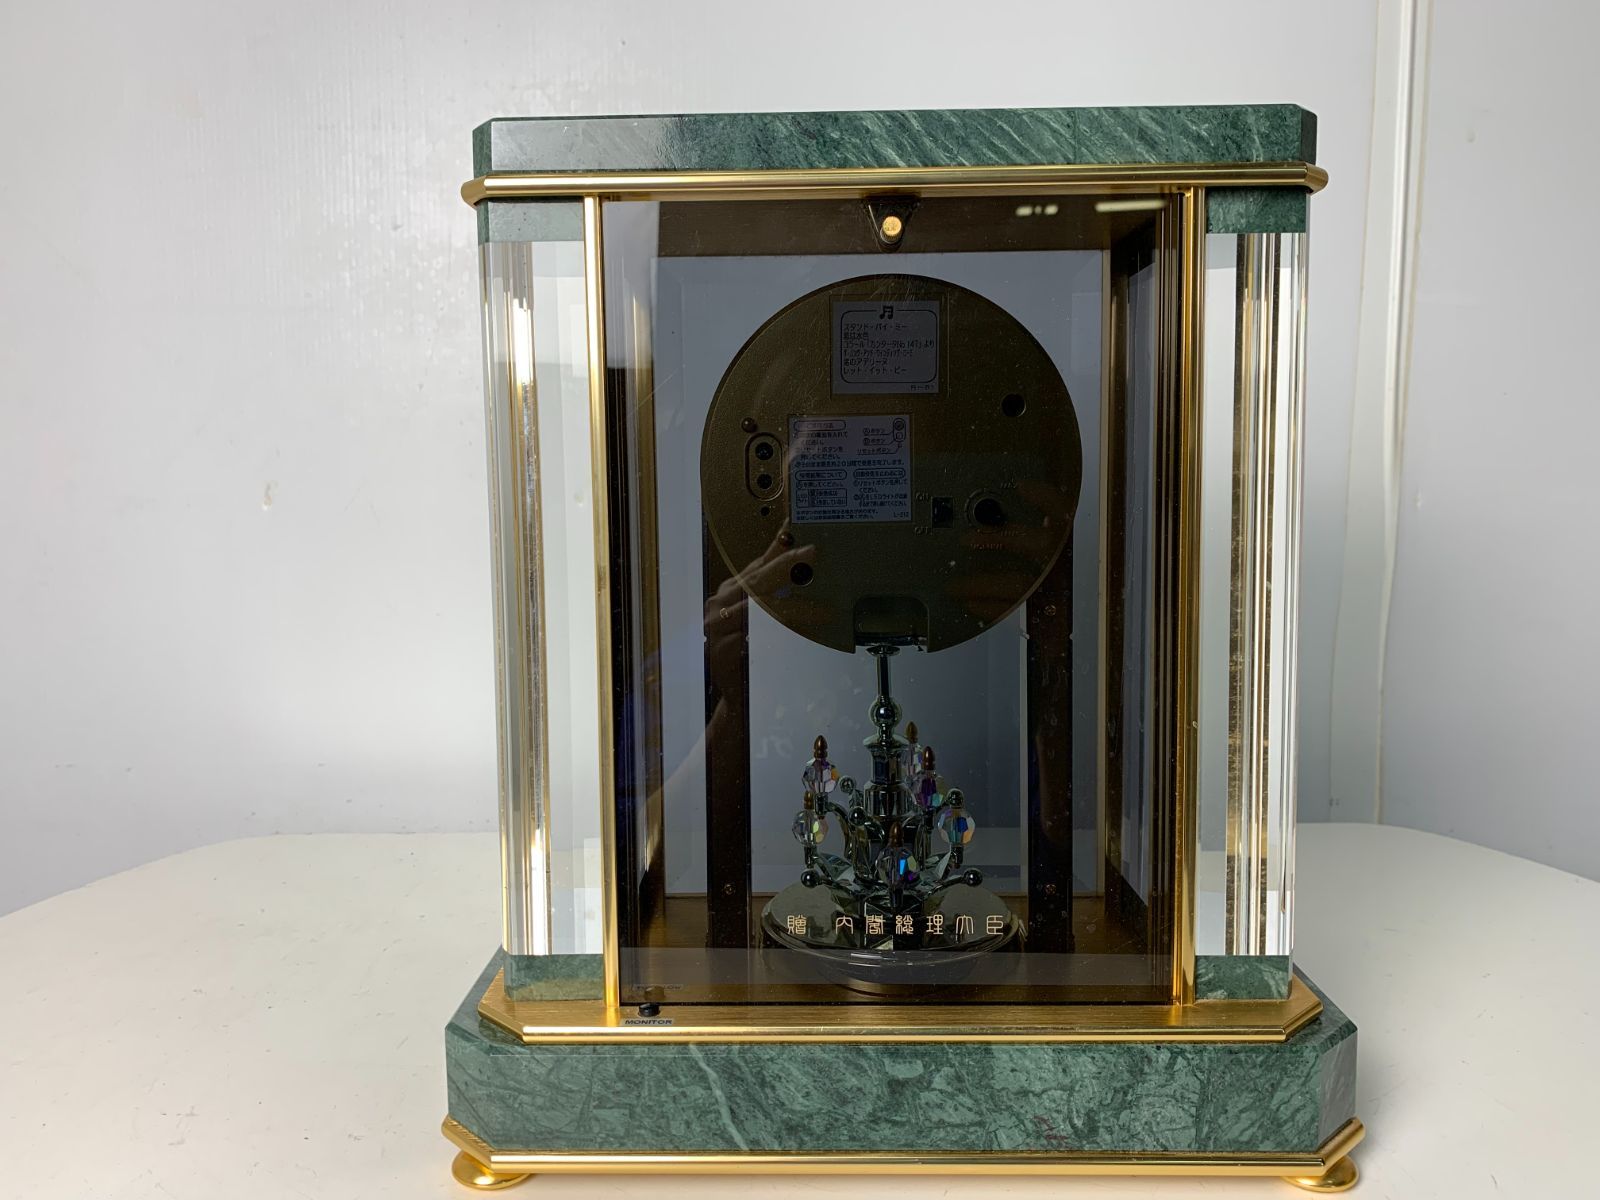 SEIKO 電波置時計 HW926G 内閣総理大臣贈呈品 - 置時計